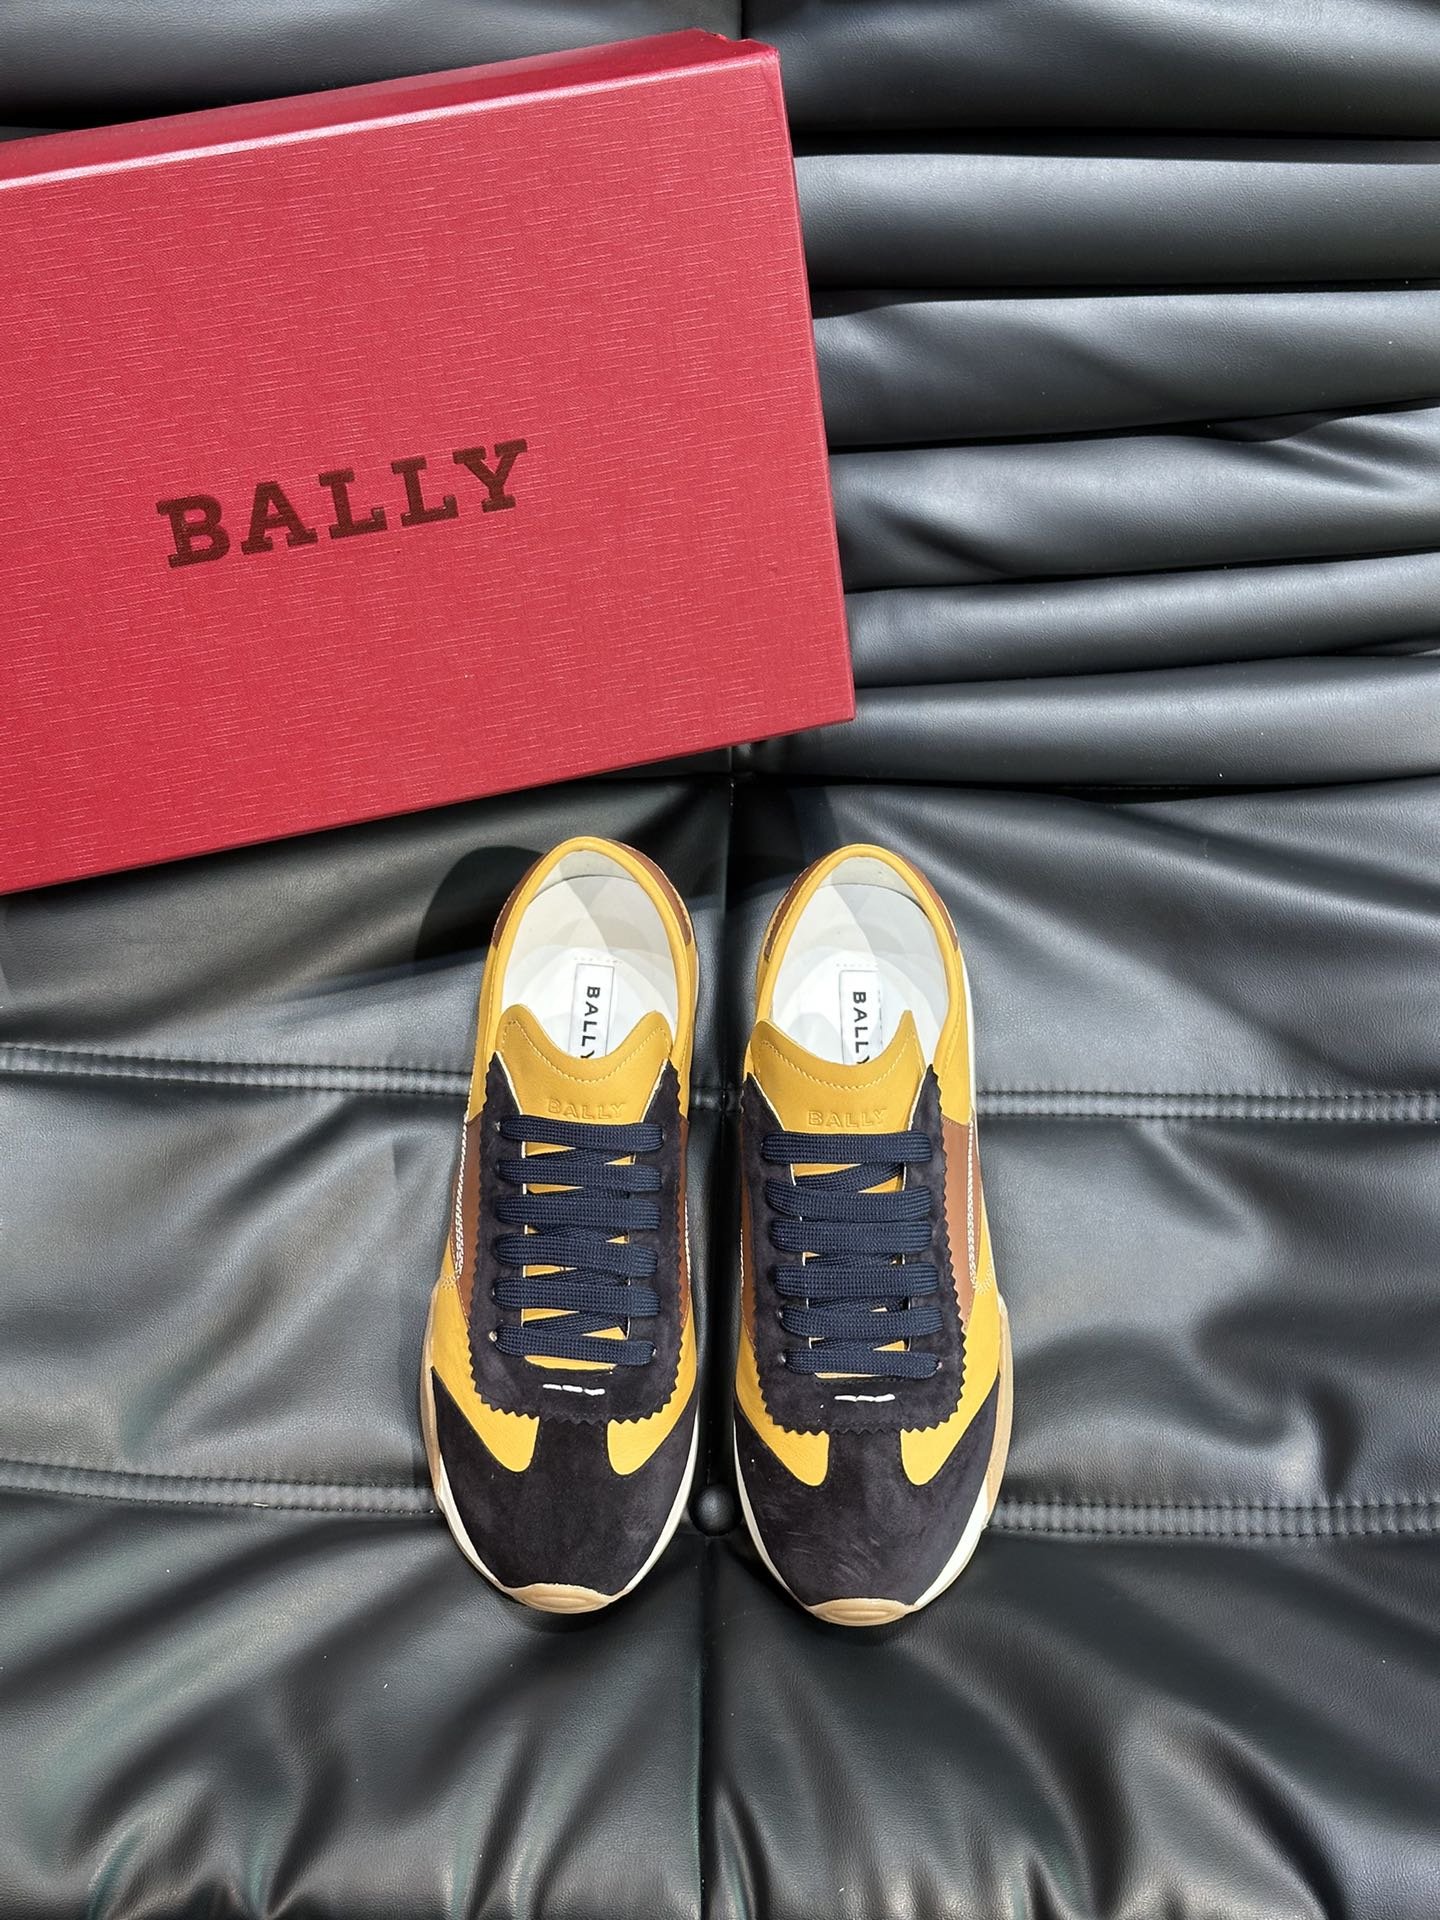 BALLY/巴利男士皮革休闲运动鞋头层小牛皮鞋面拼色设计简约时尚风格搭配经典Bally元素点缀细节鞋身撞